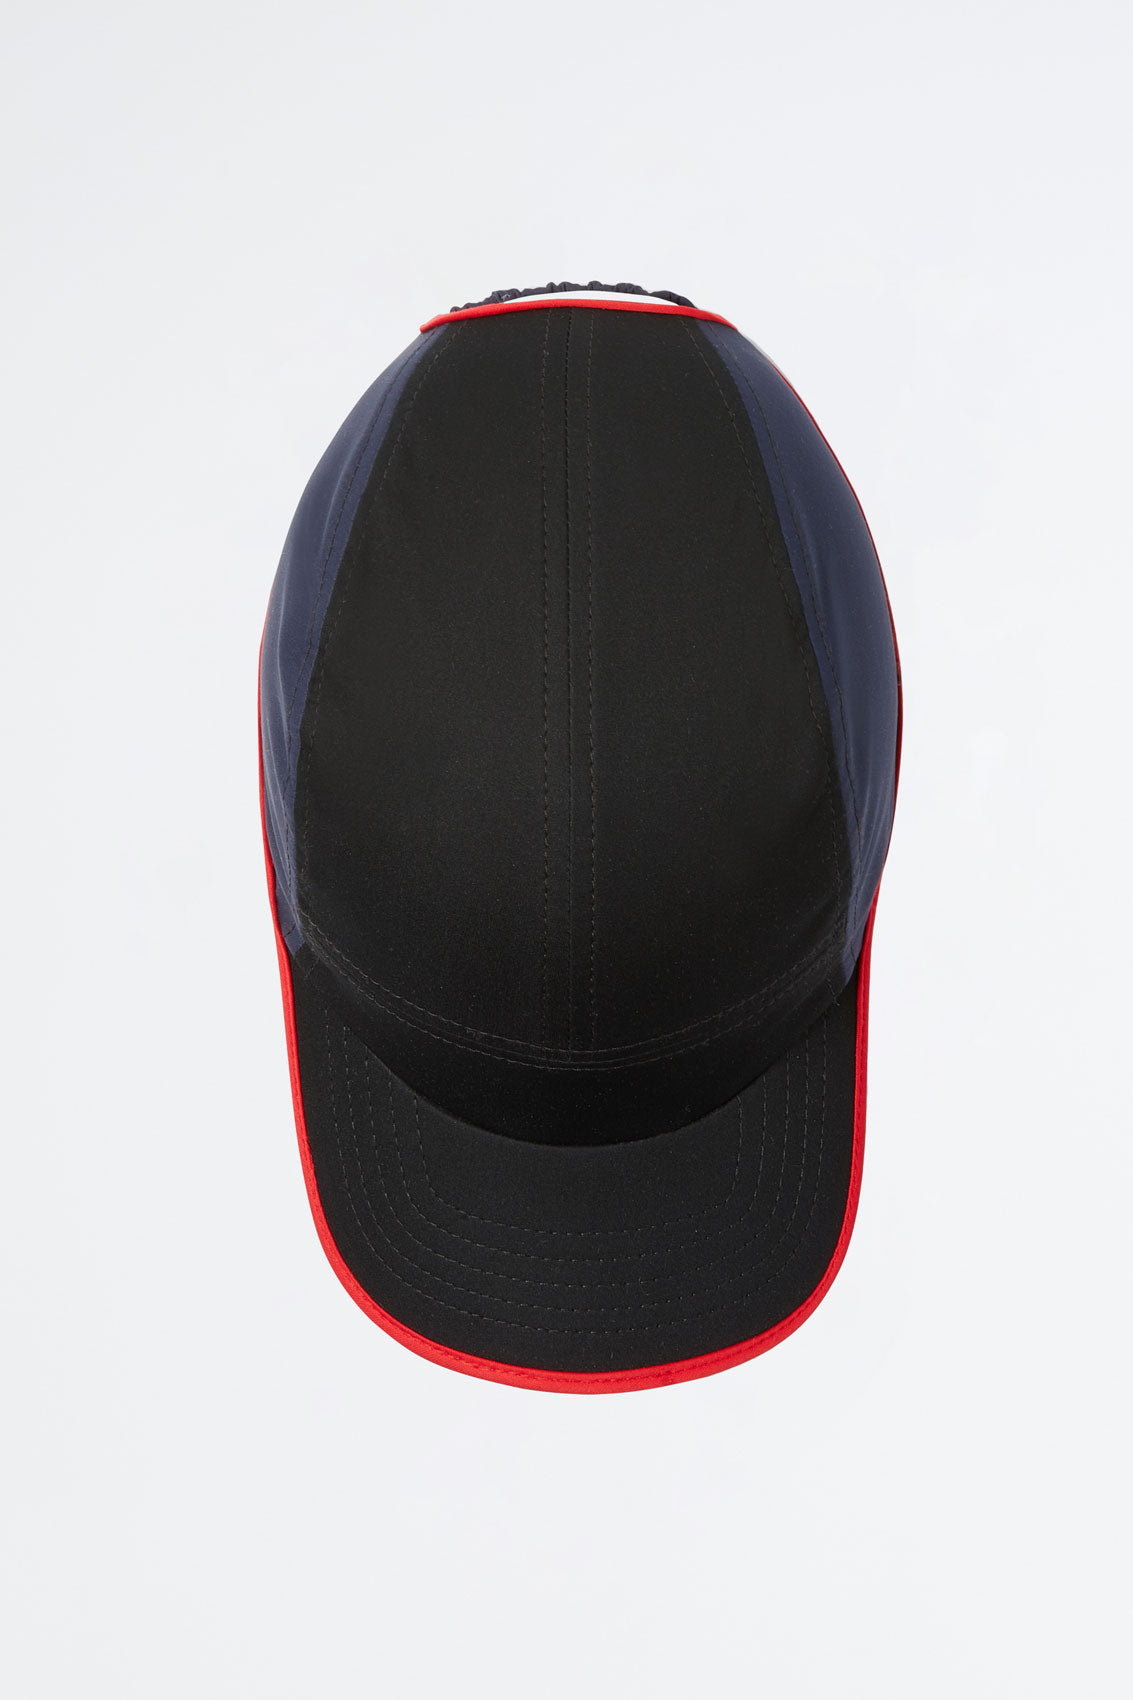 BASEBALL CAP / black, blue & red